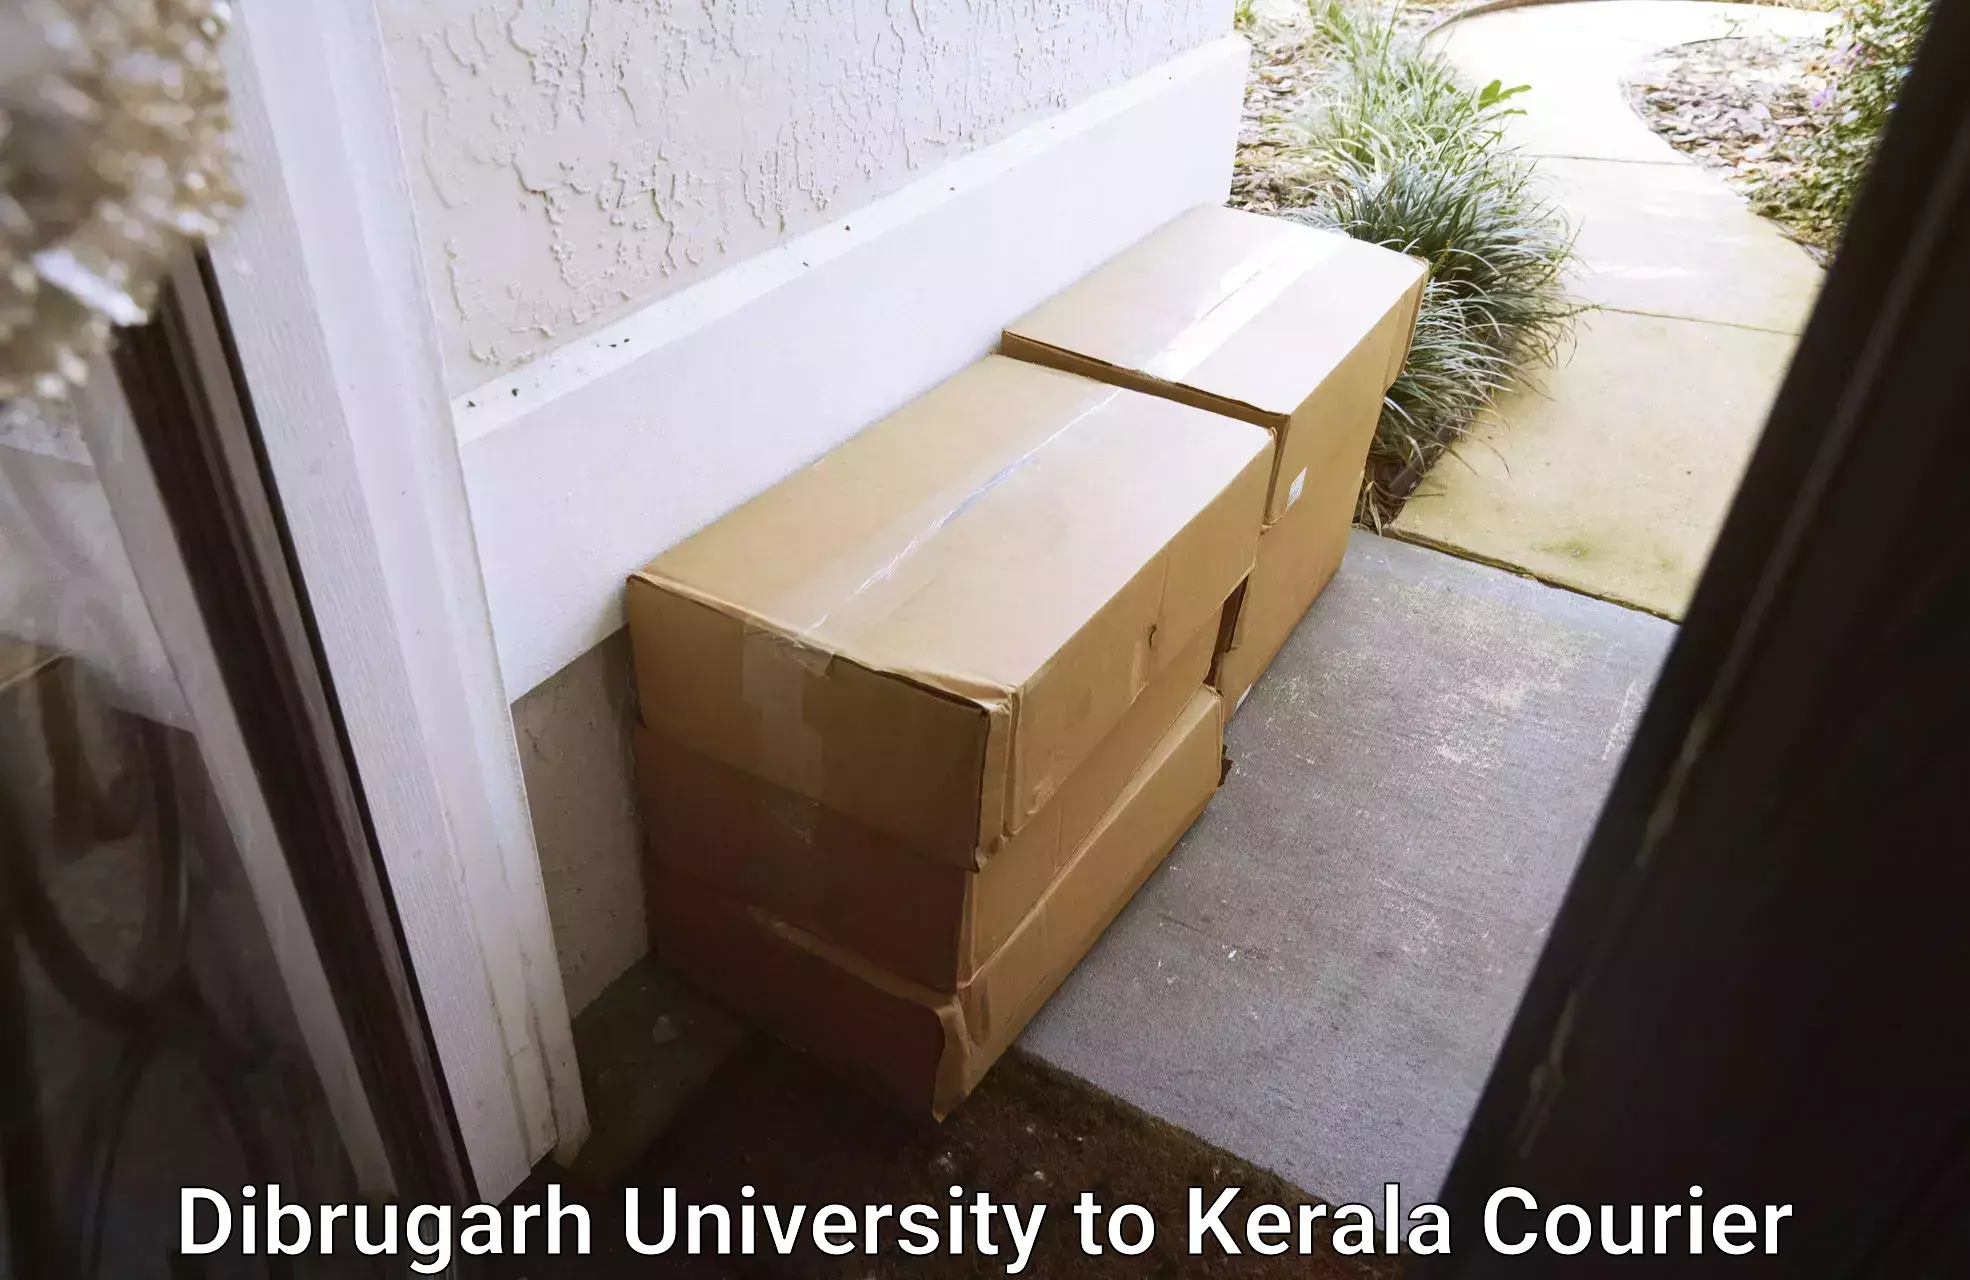 Package delivery network Dibrugarh University to Ernakulam